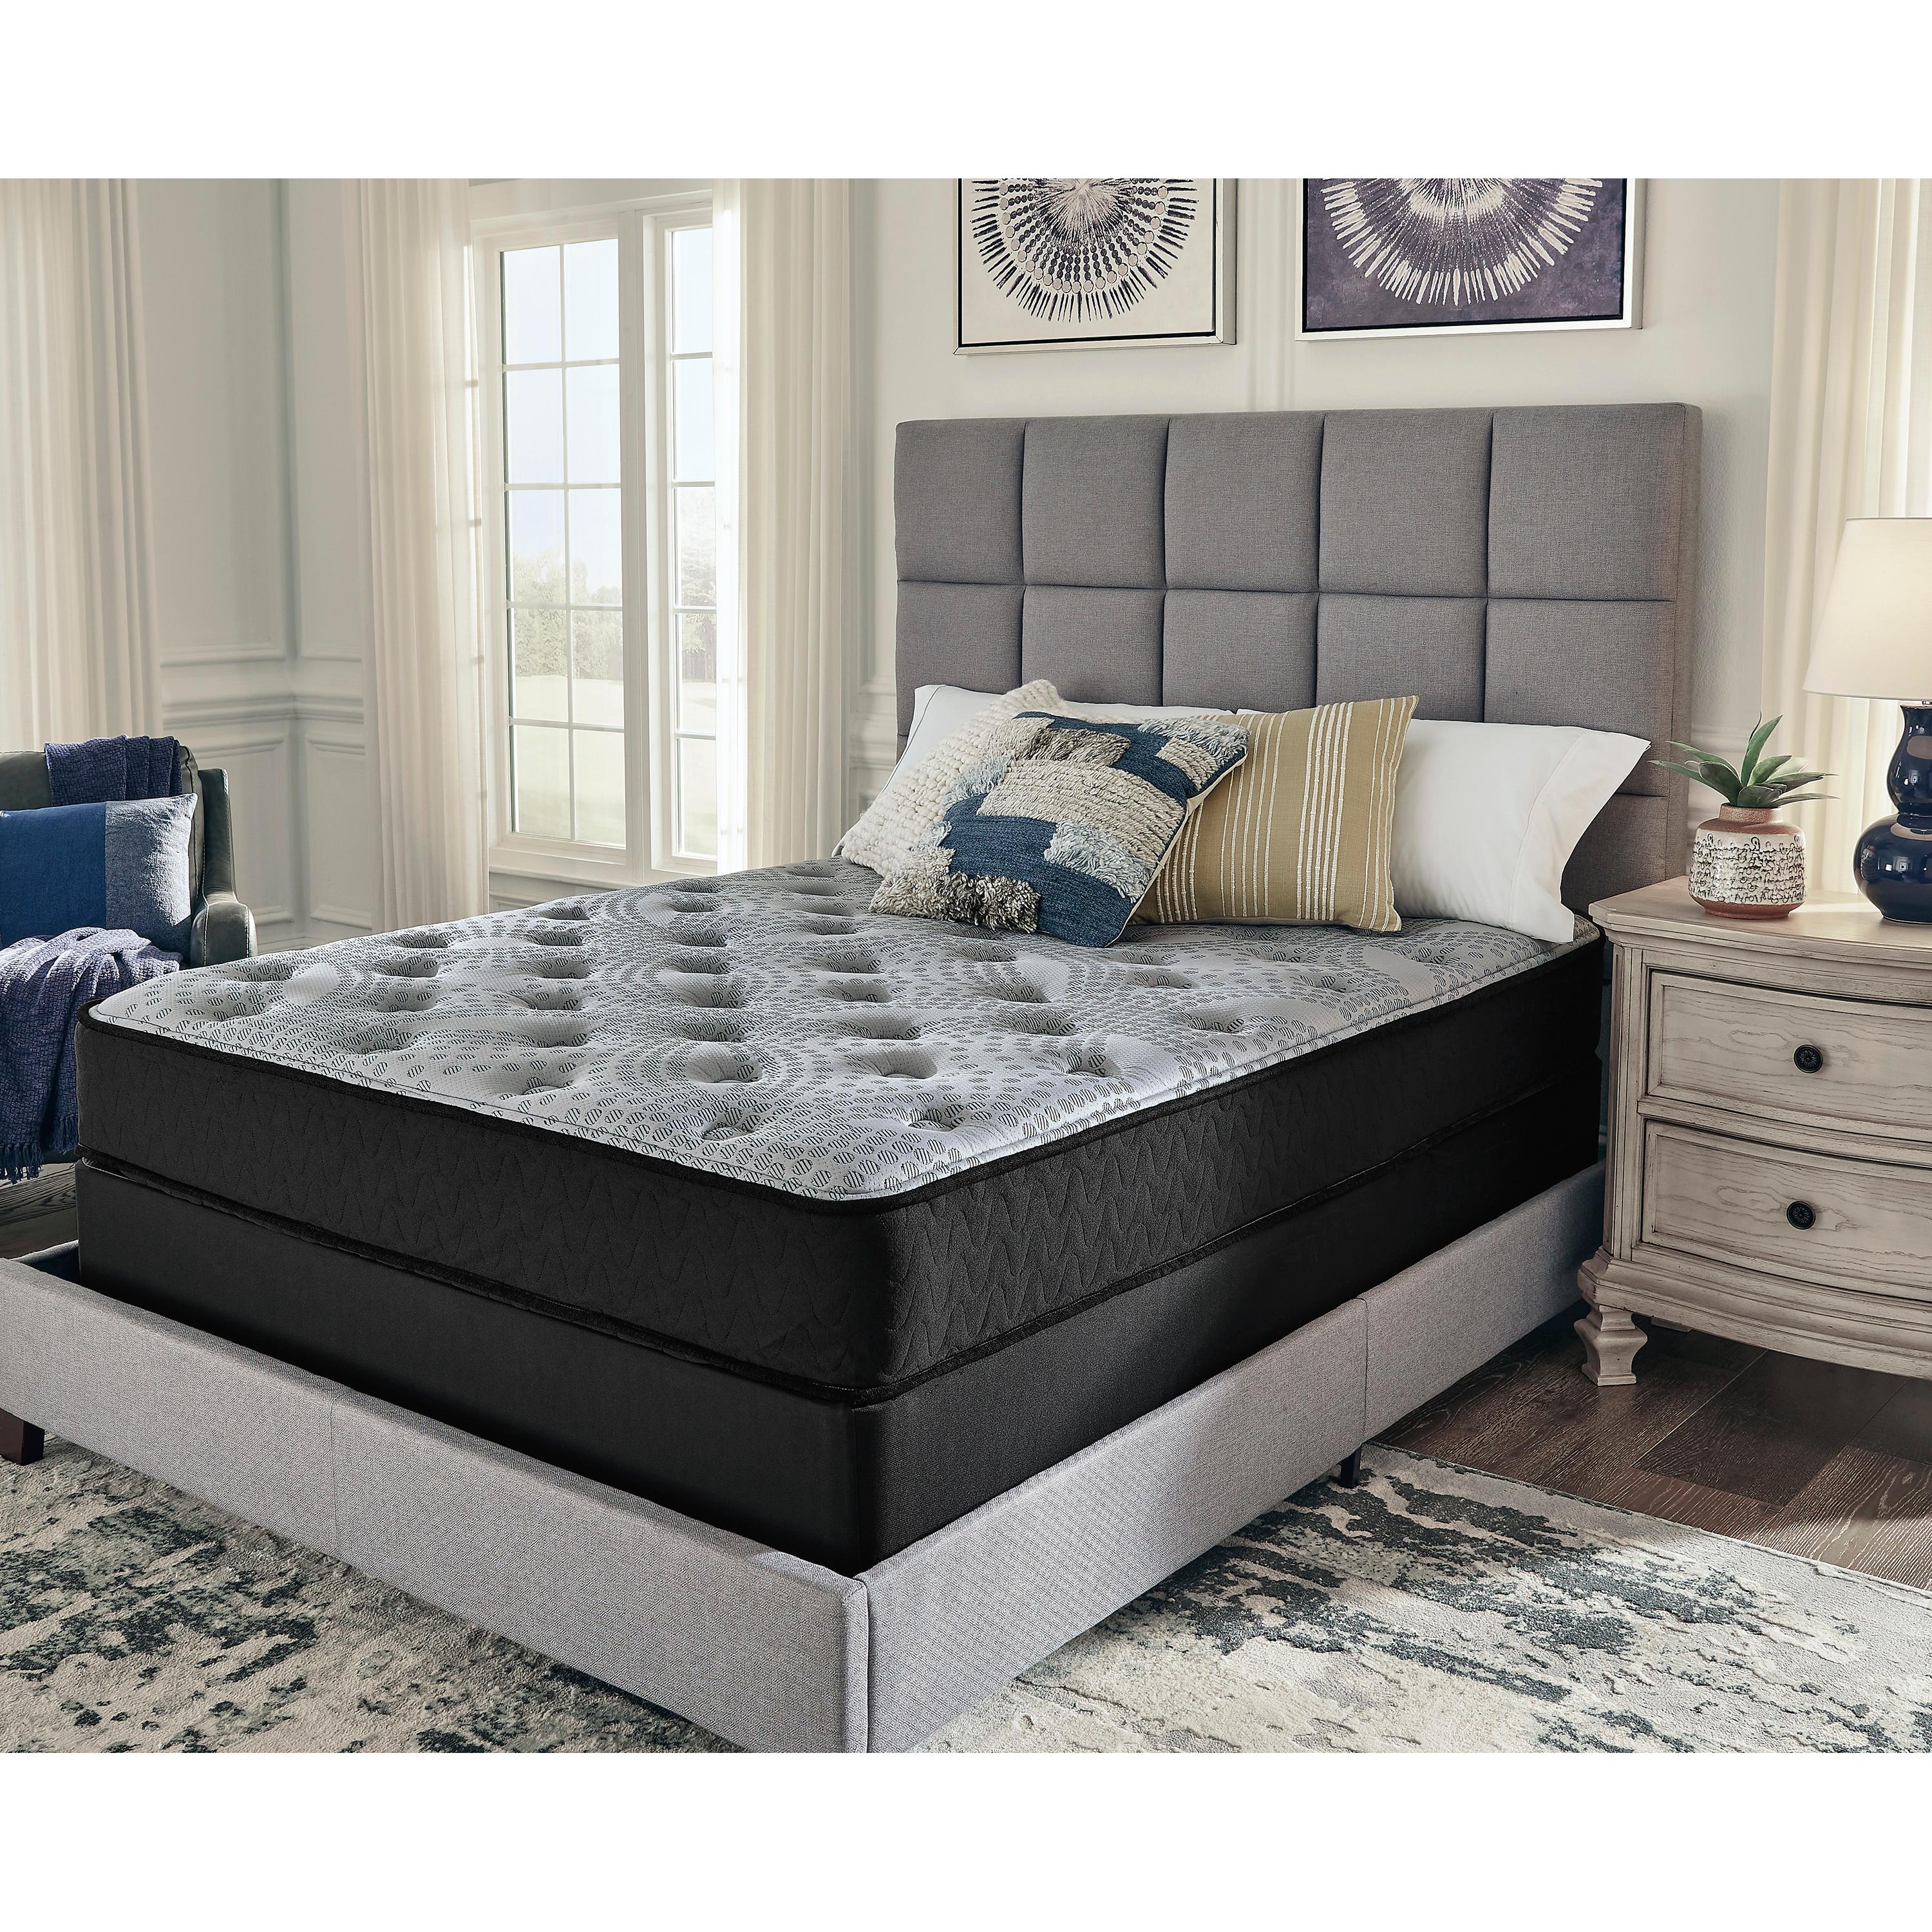 Sierra Sleep Comfort Plus M50941 King Mattress